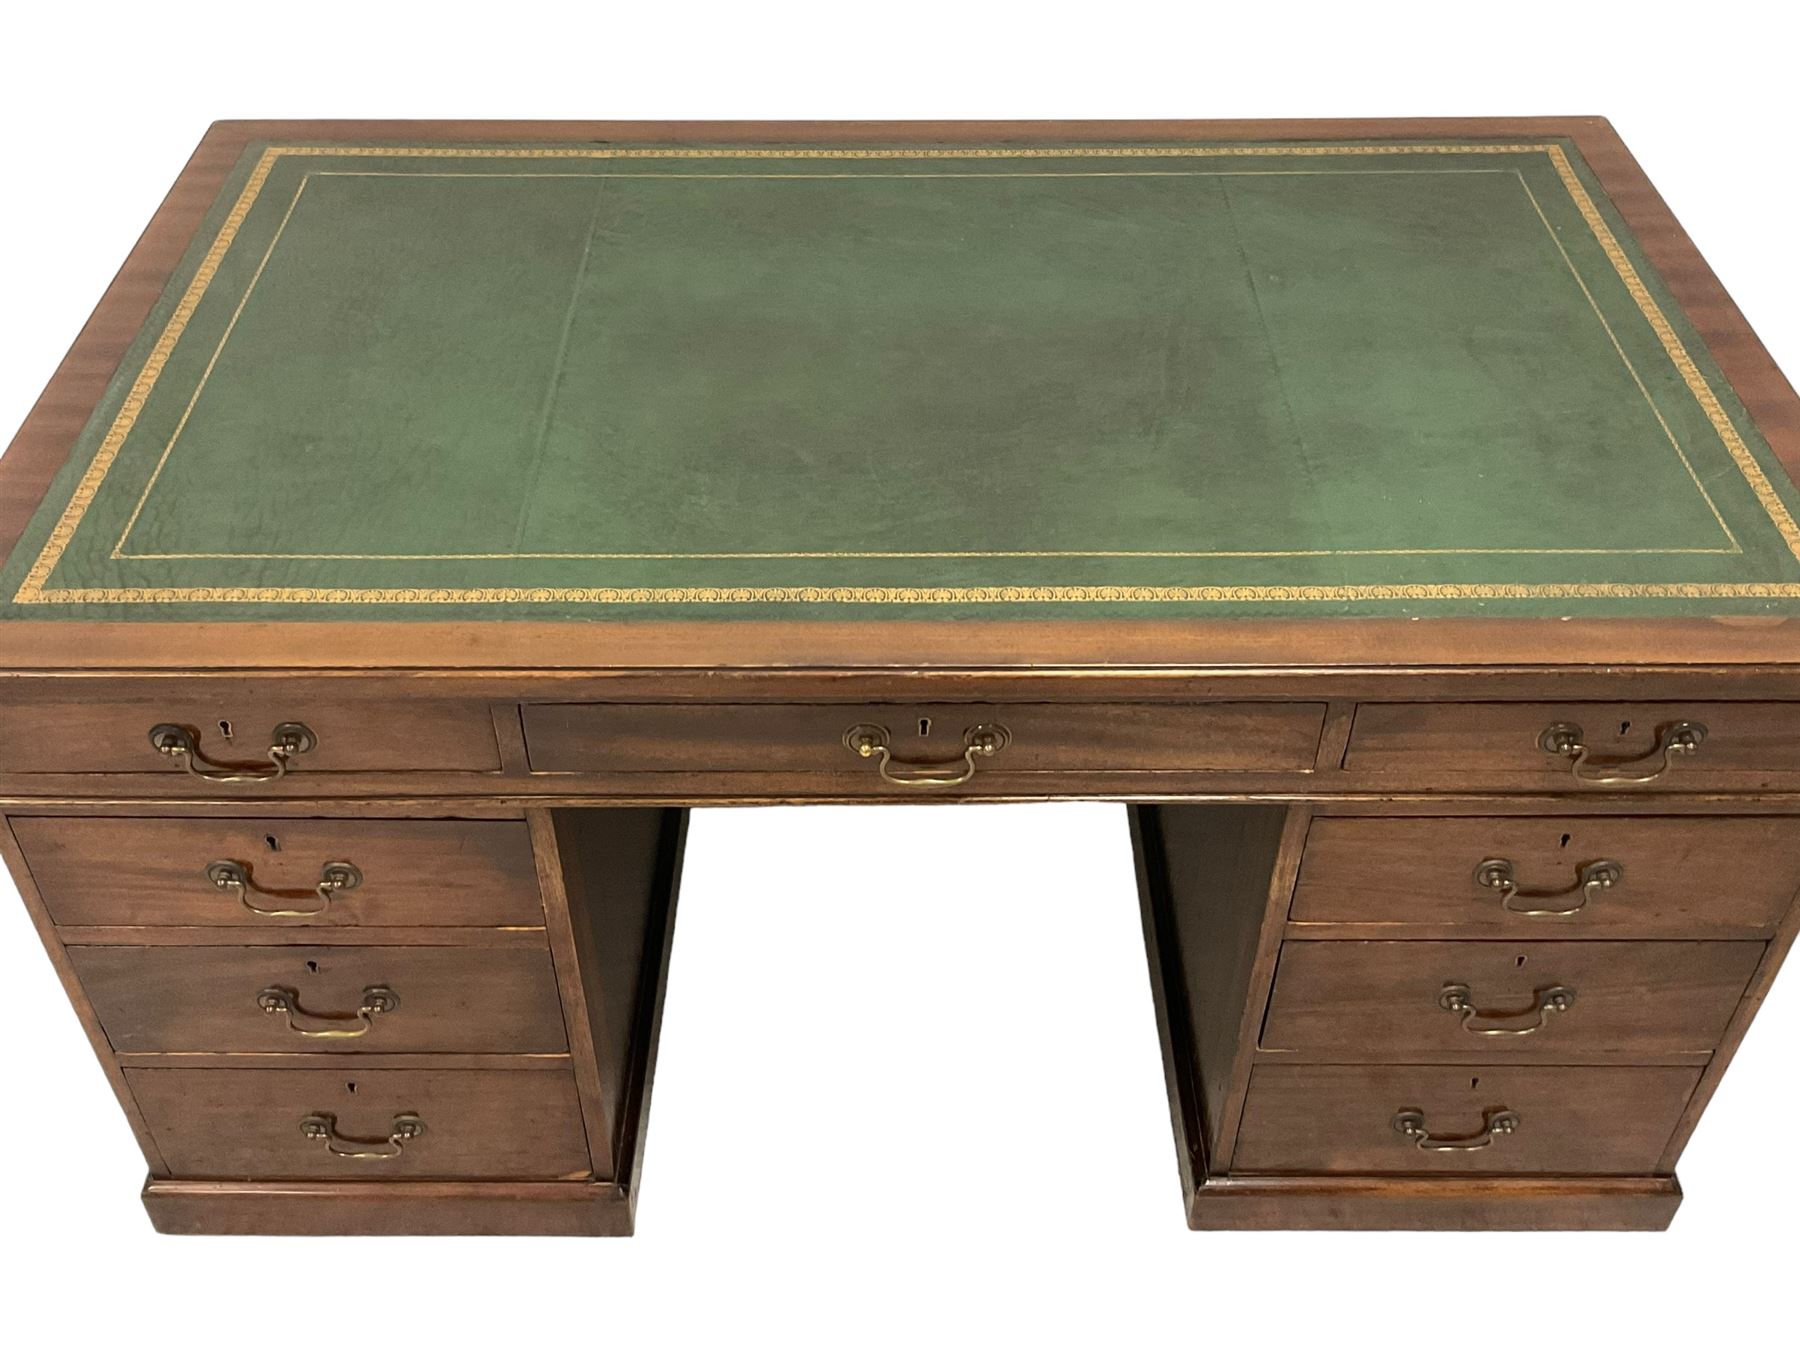 19th century mahogany twin pedestal desk - Image 3 of 7